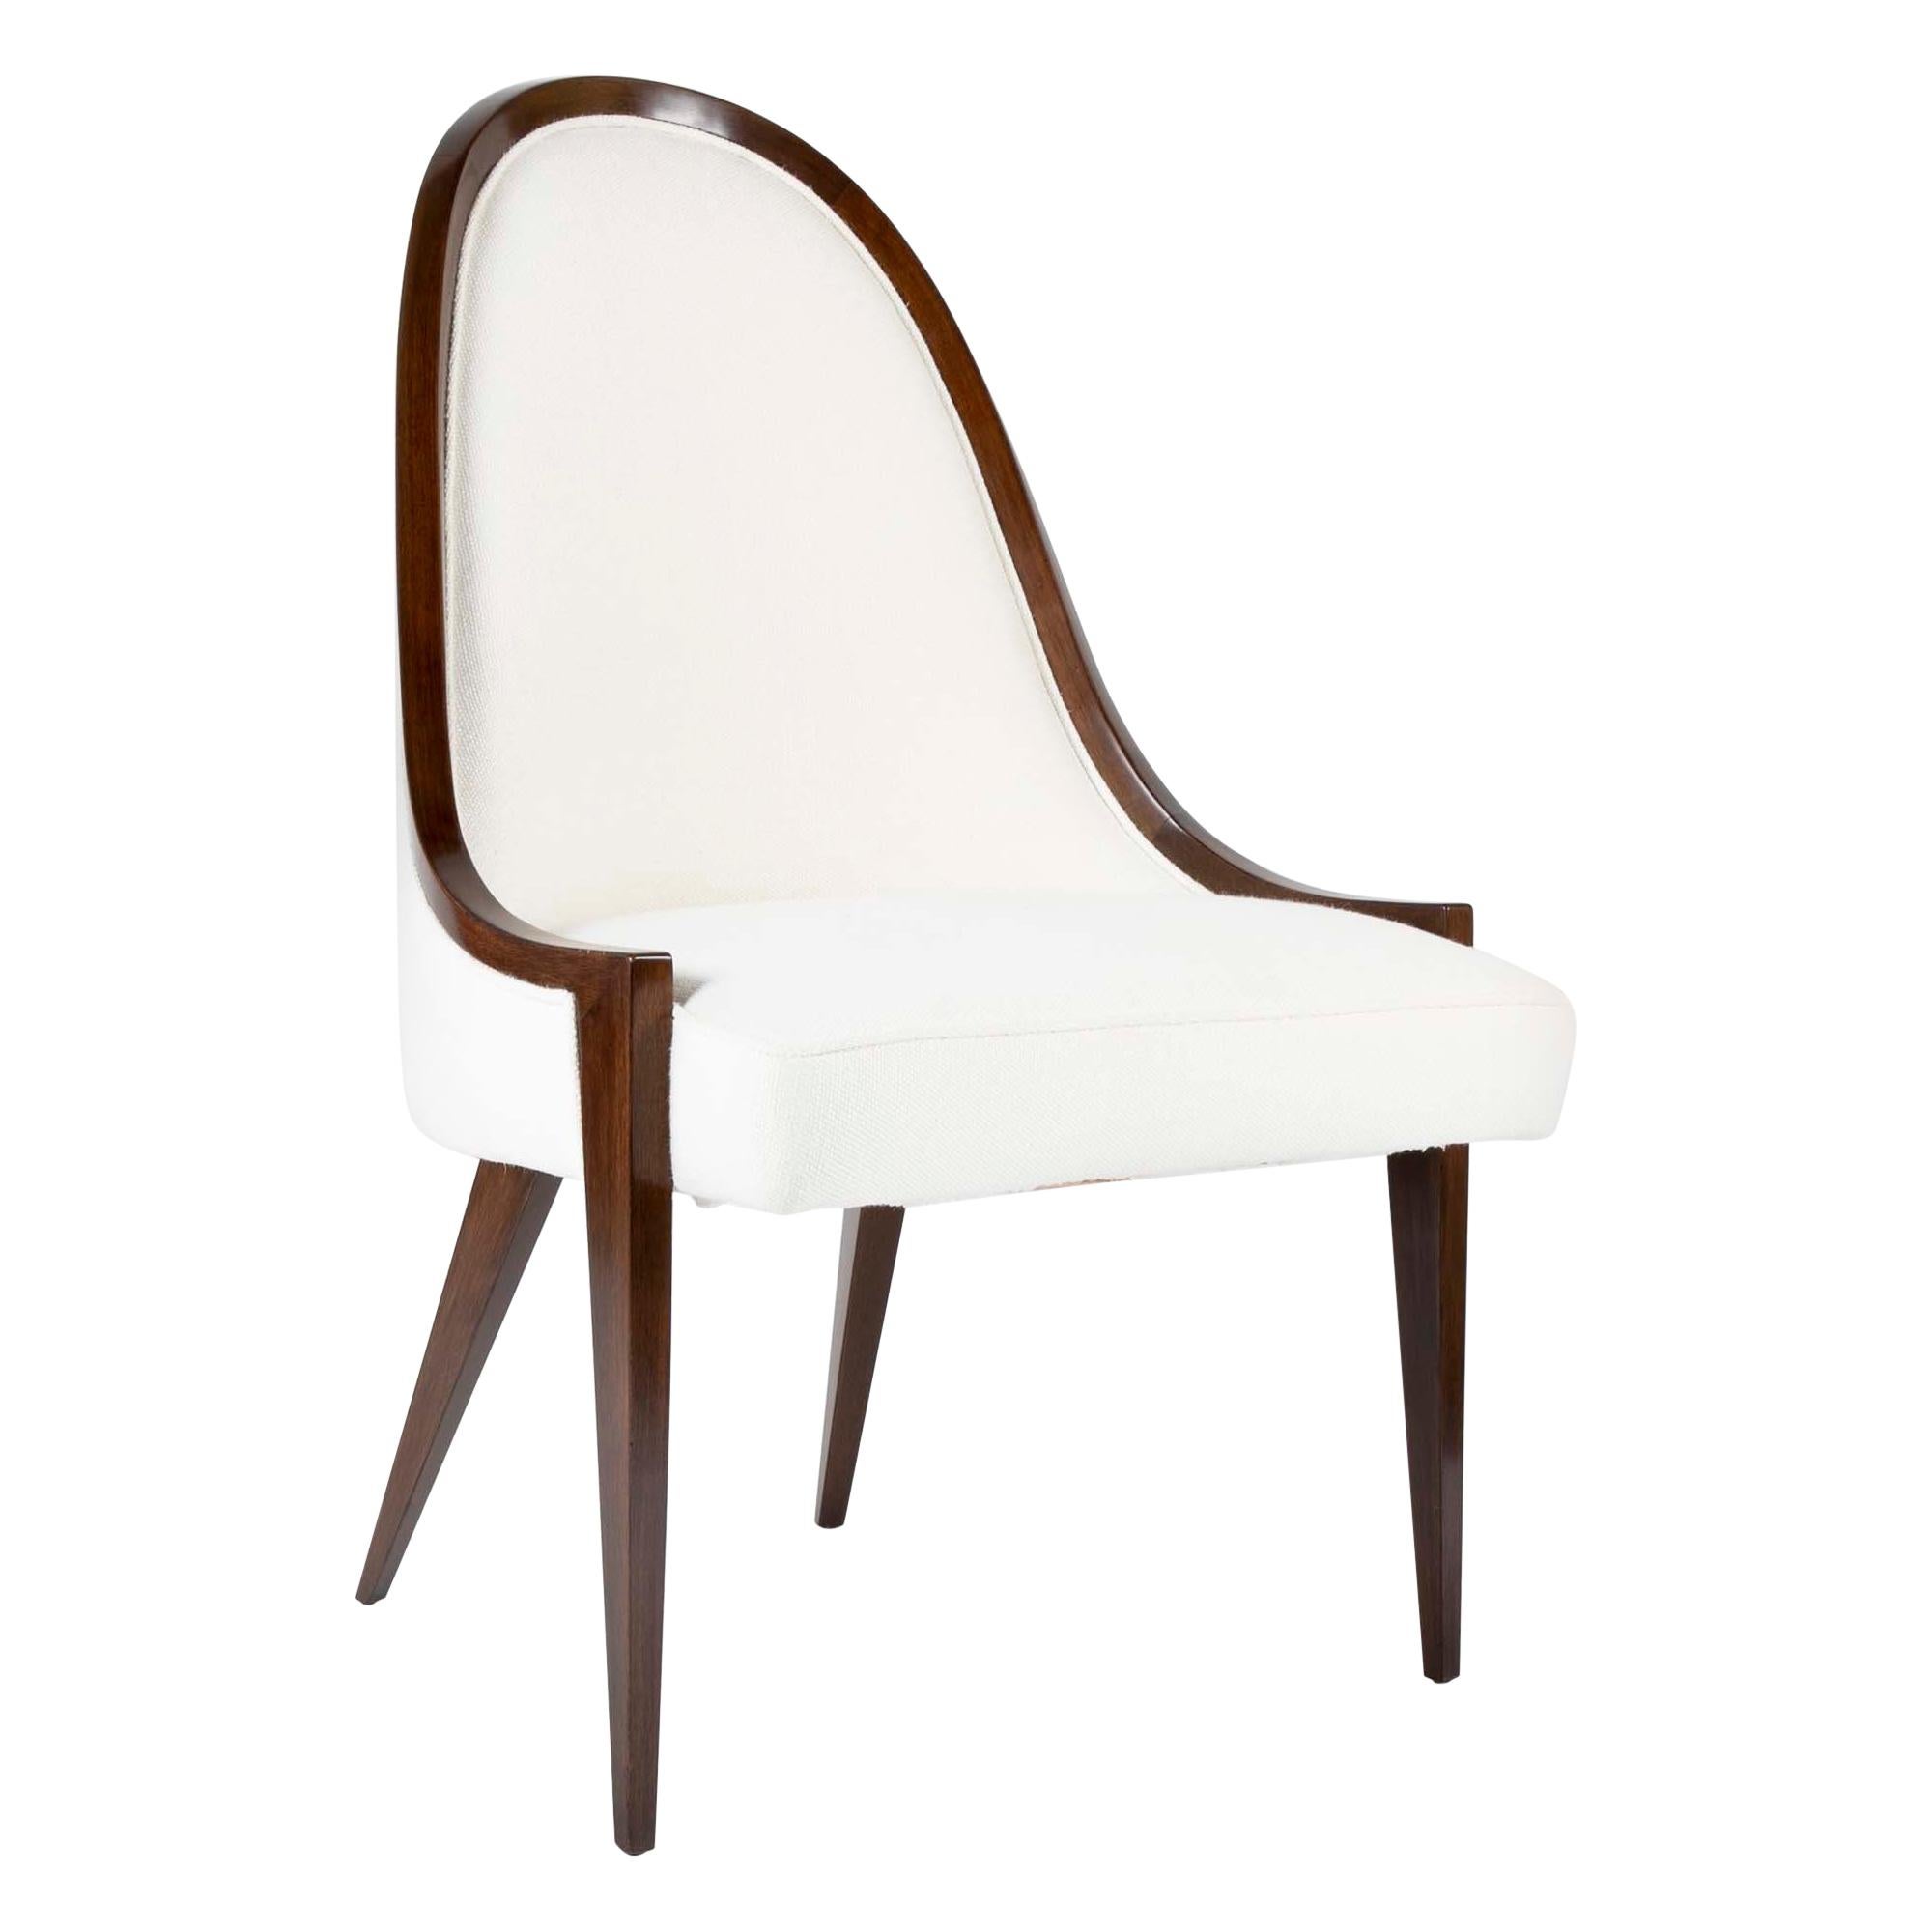 Walnut Chair Designed by Harvey Probber